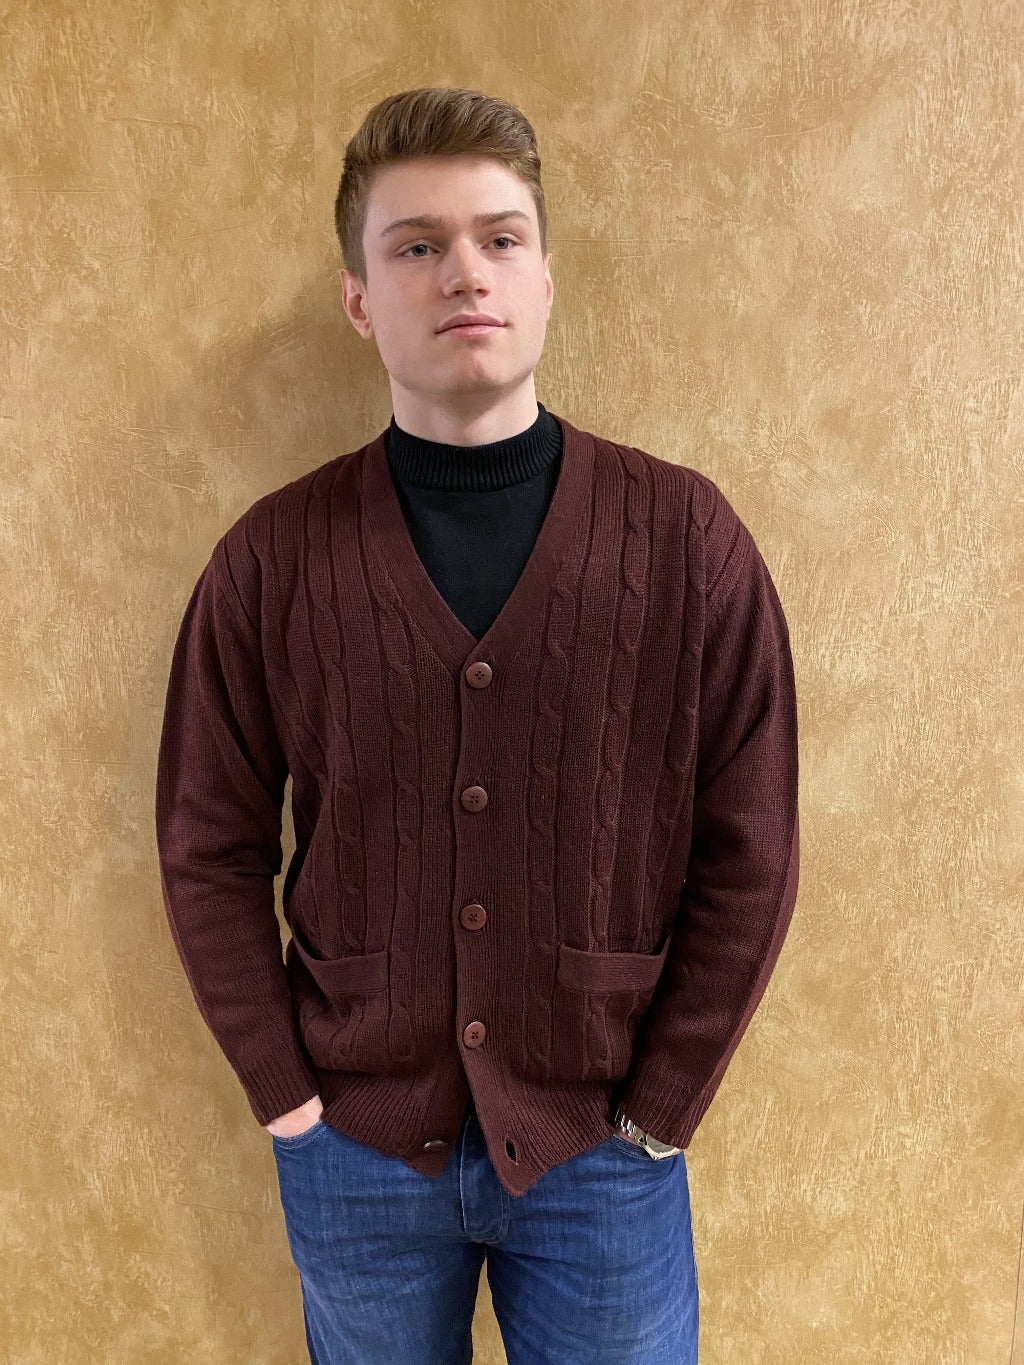 Big Men's Cardigan Sweater